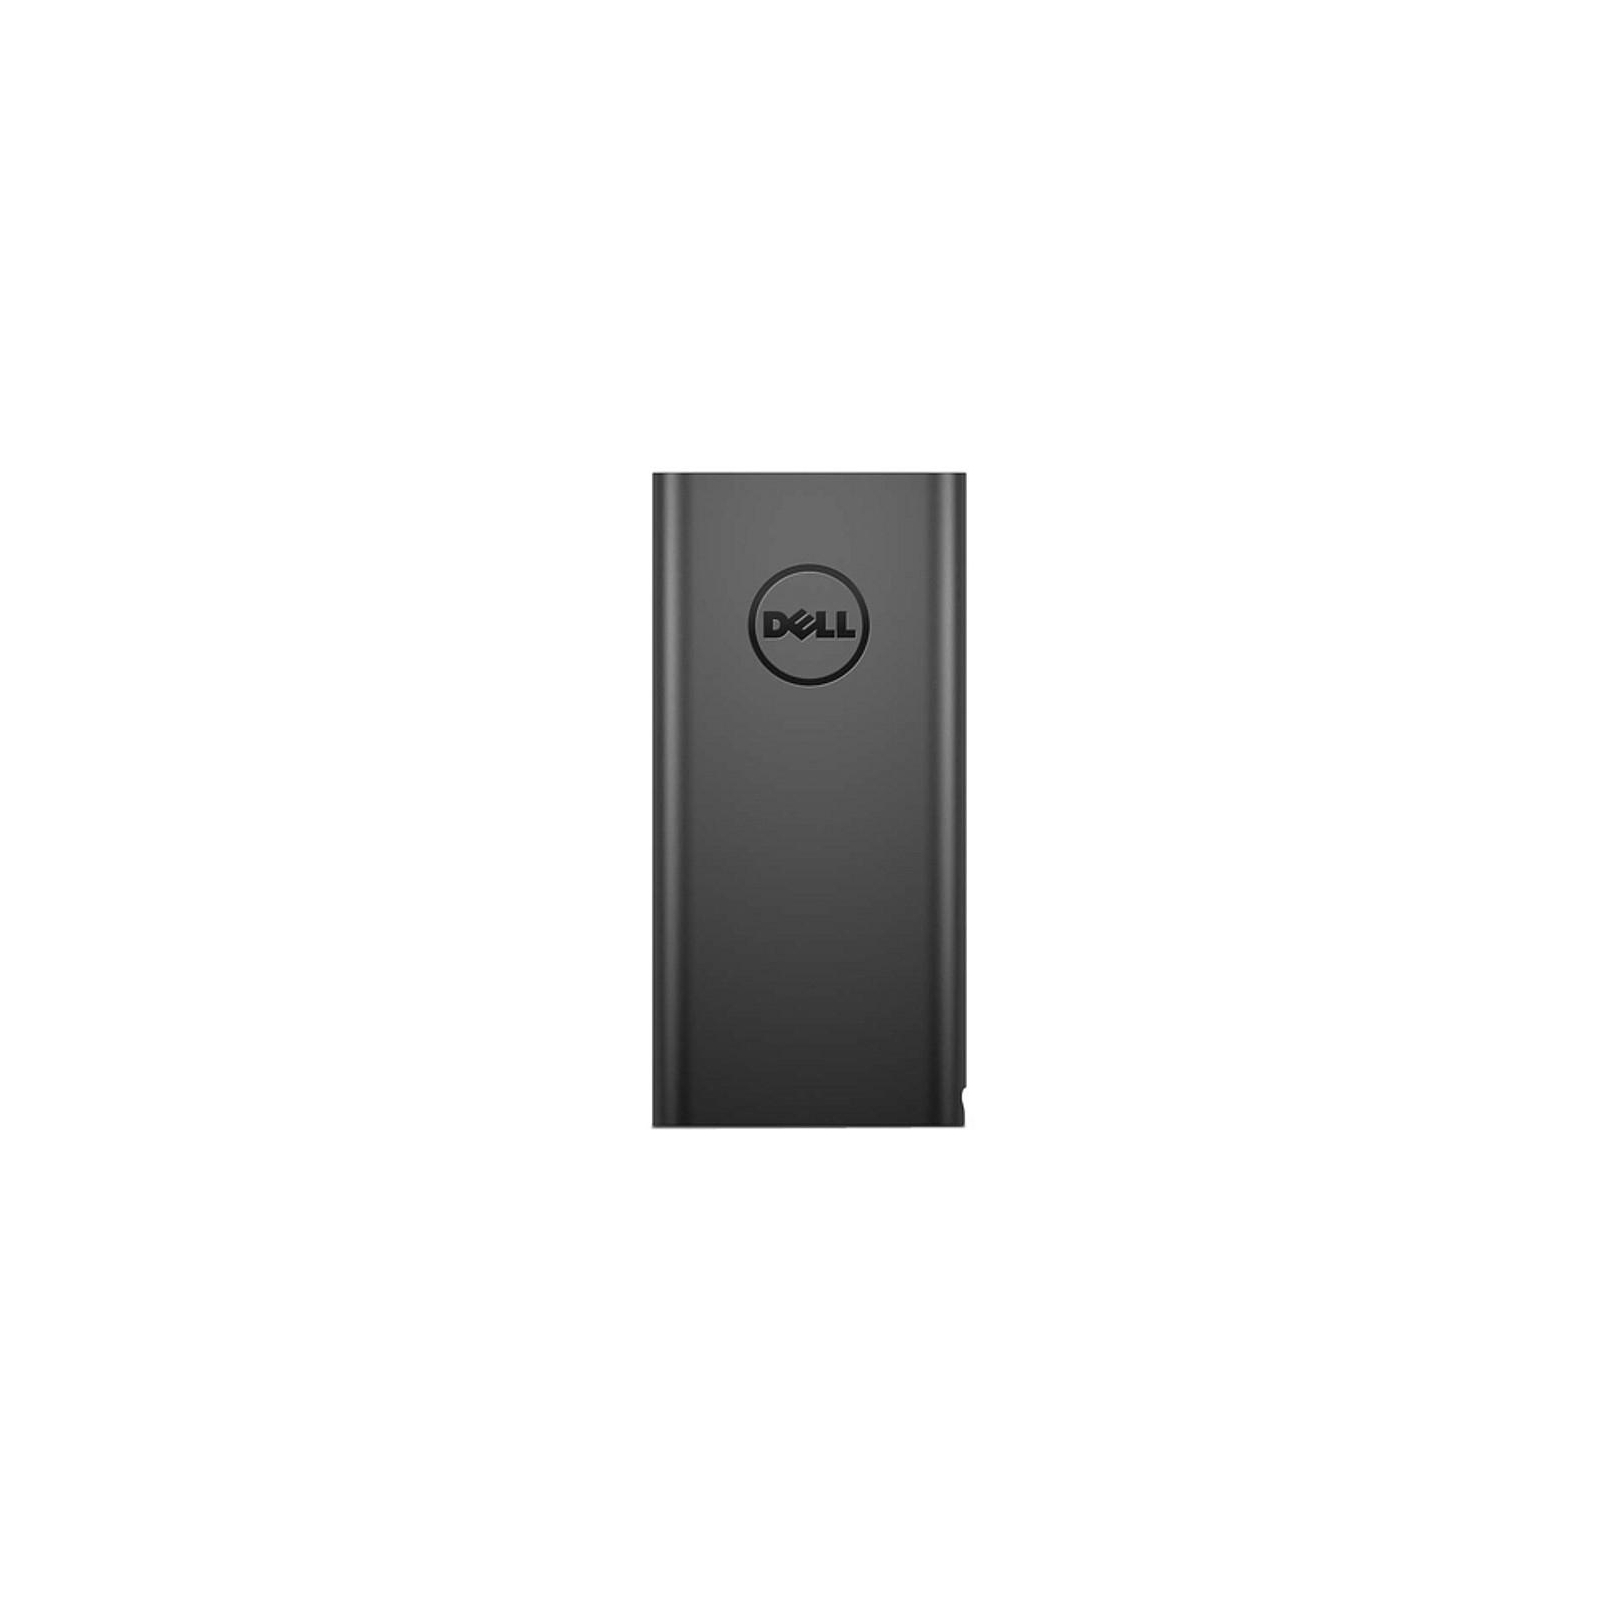 Батарея универсальная Dell Power Companion 18000 mAh (451-BBMV)